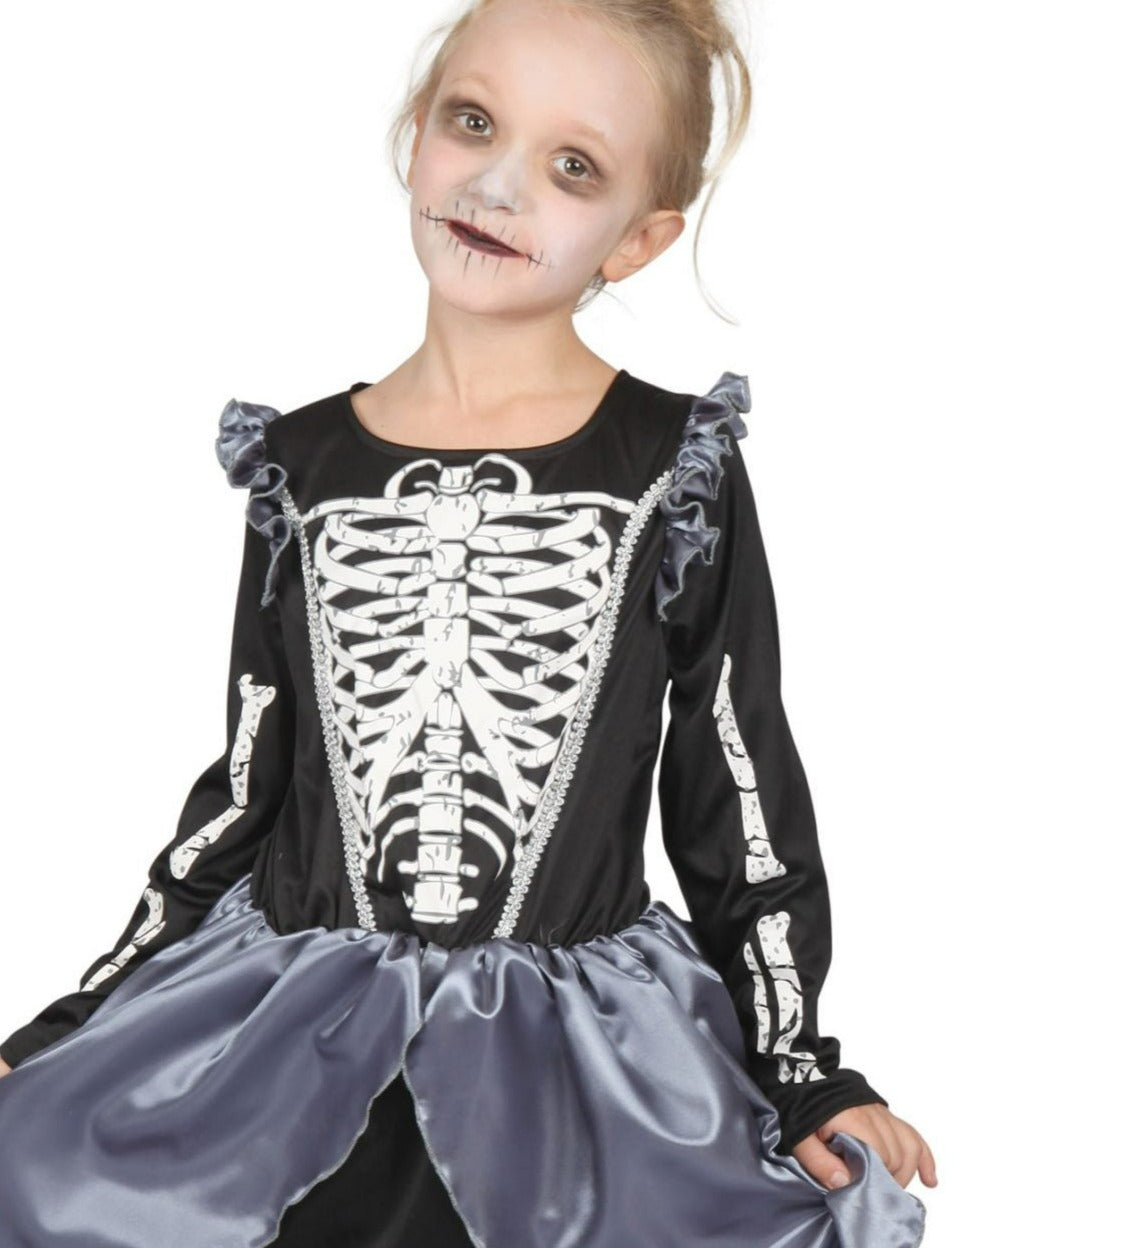 Skeleton Princess Costume - Kids